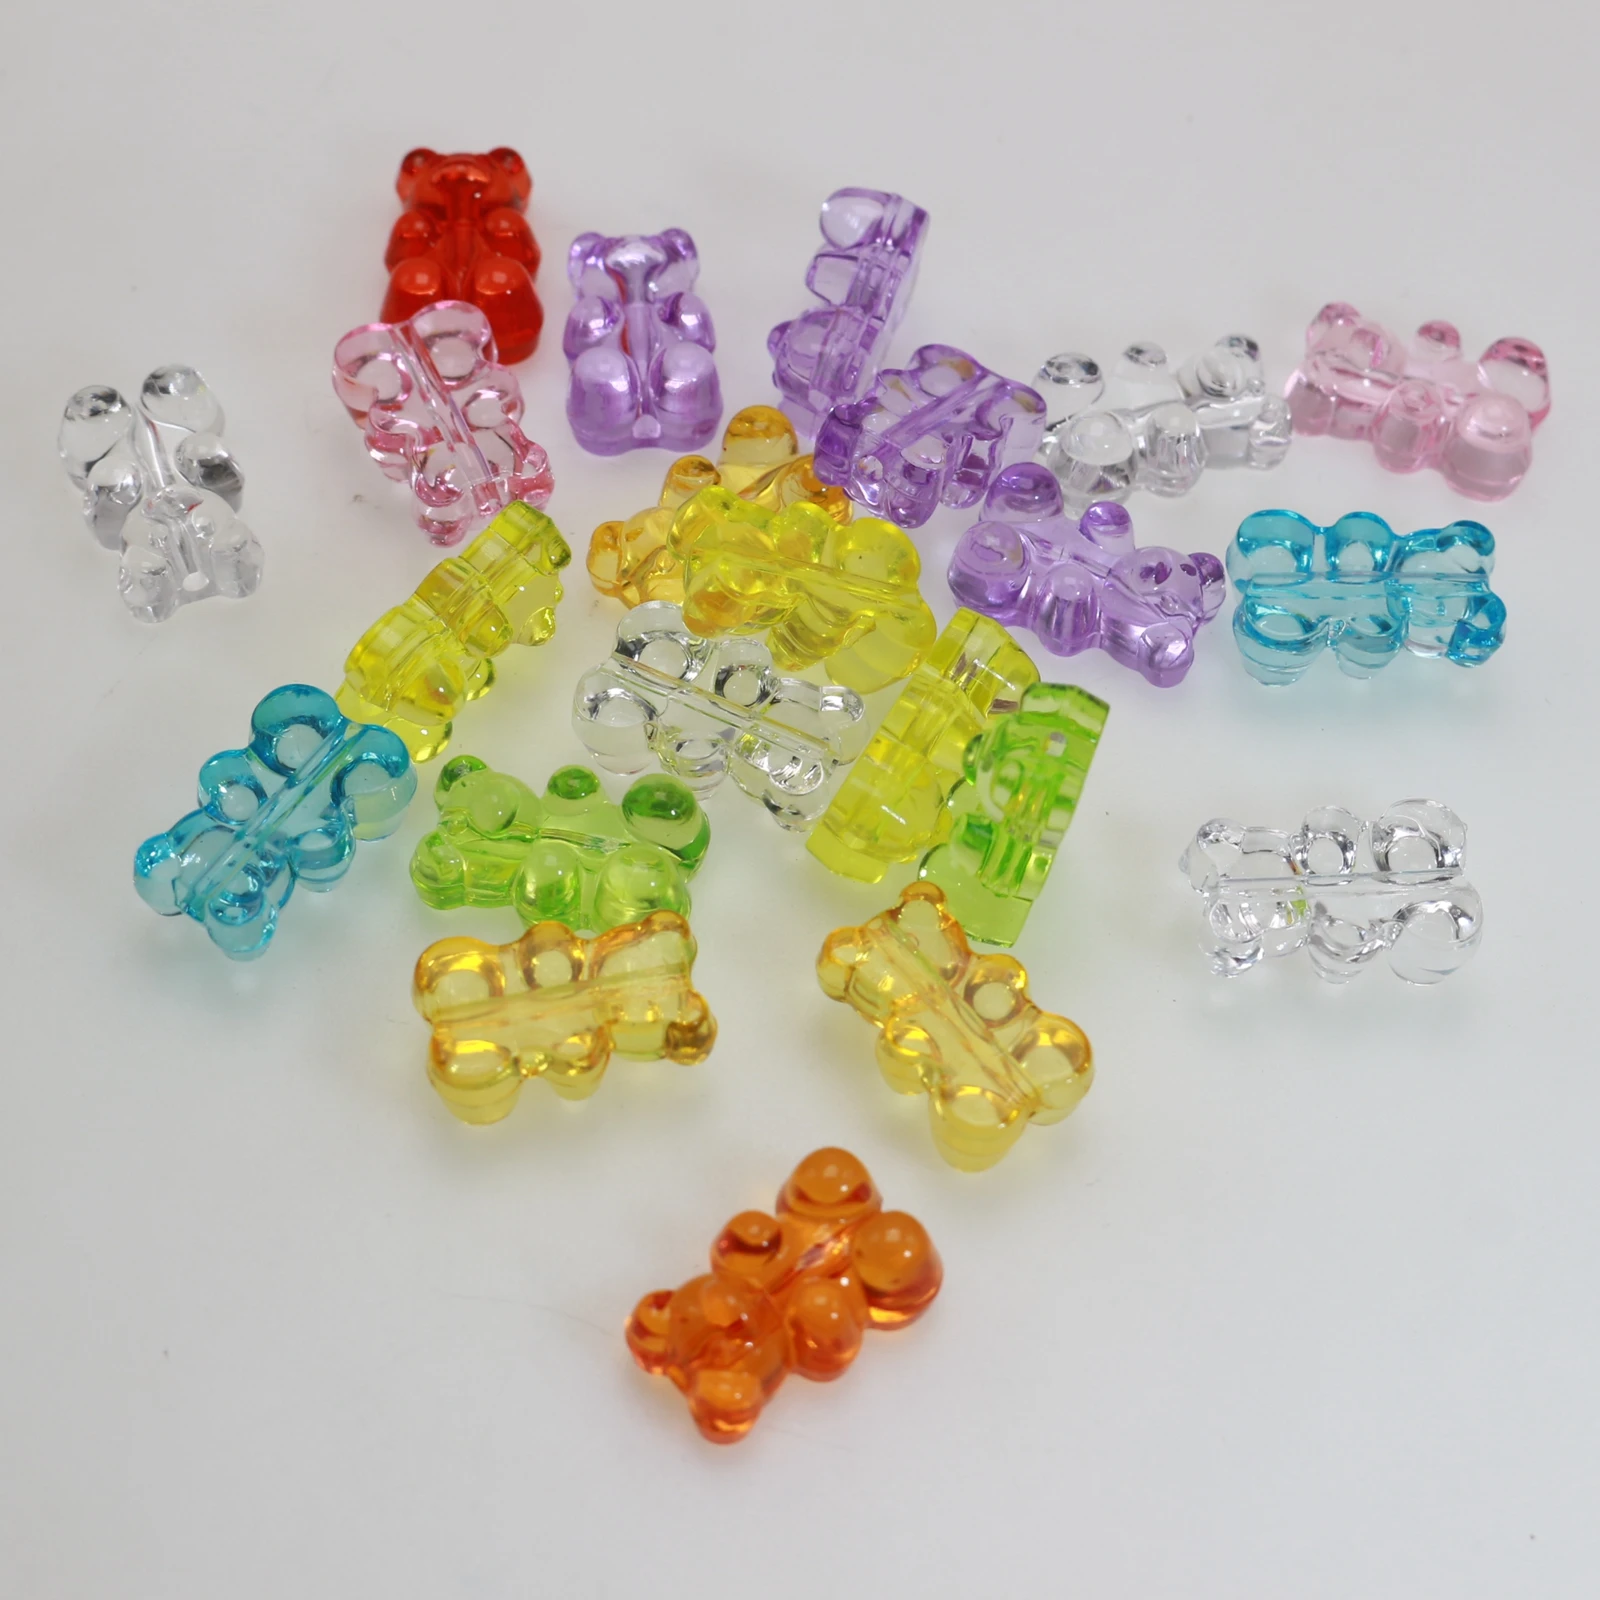 50 Mixed Color Transparent Acrylic Gummy Bear Beads 19mm DIY Bracelet Jewelry